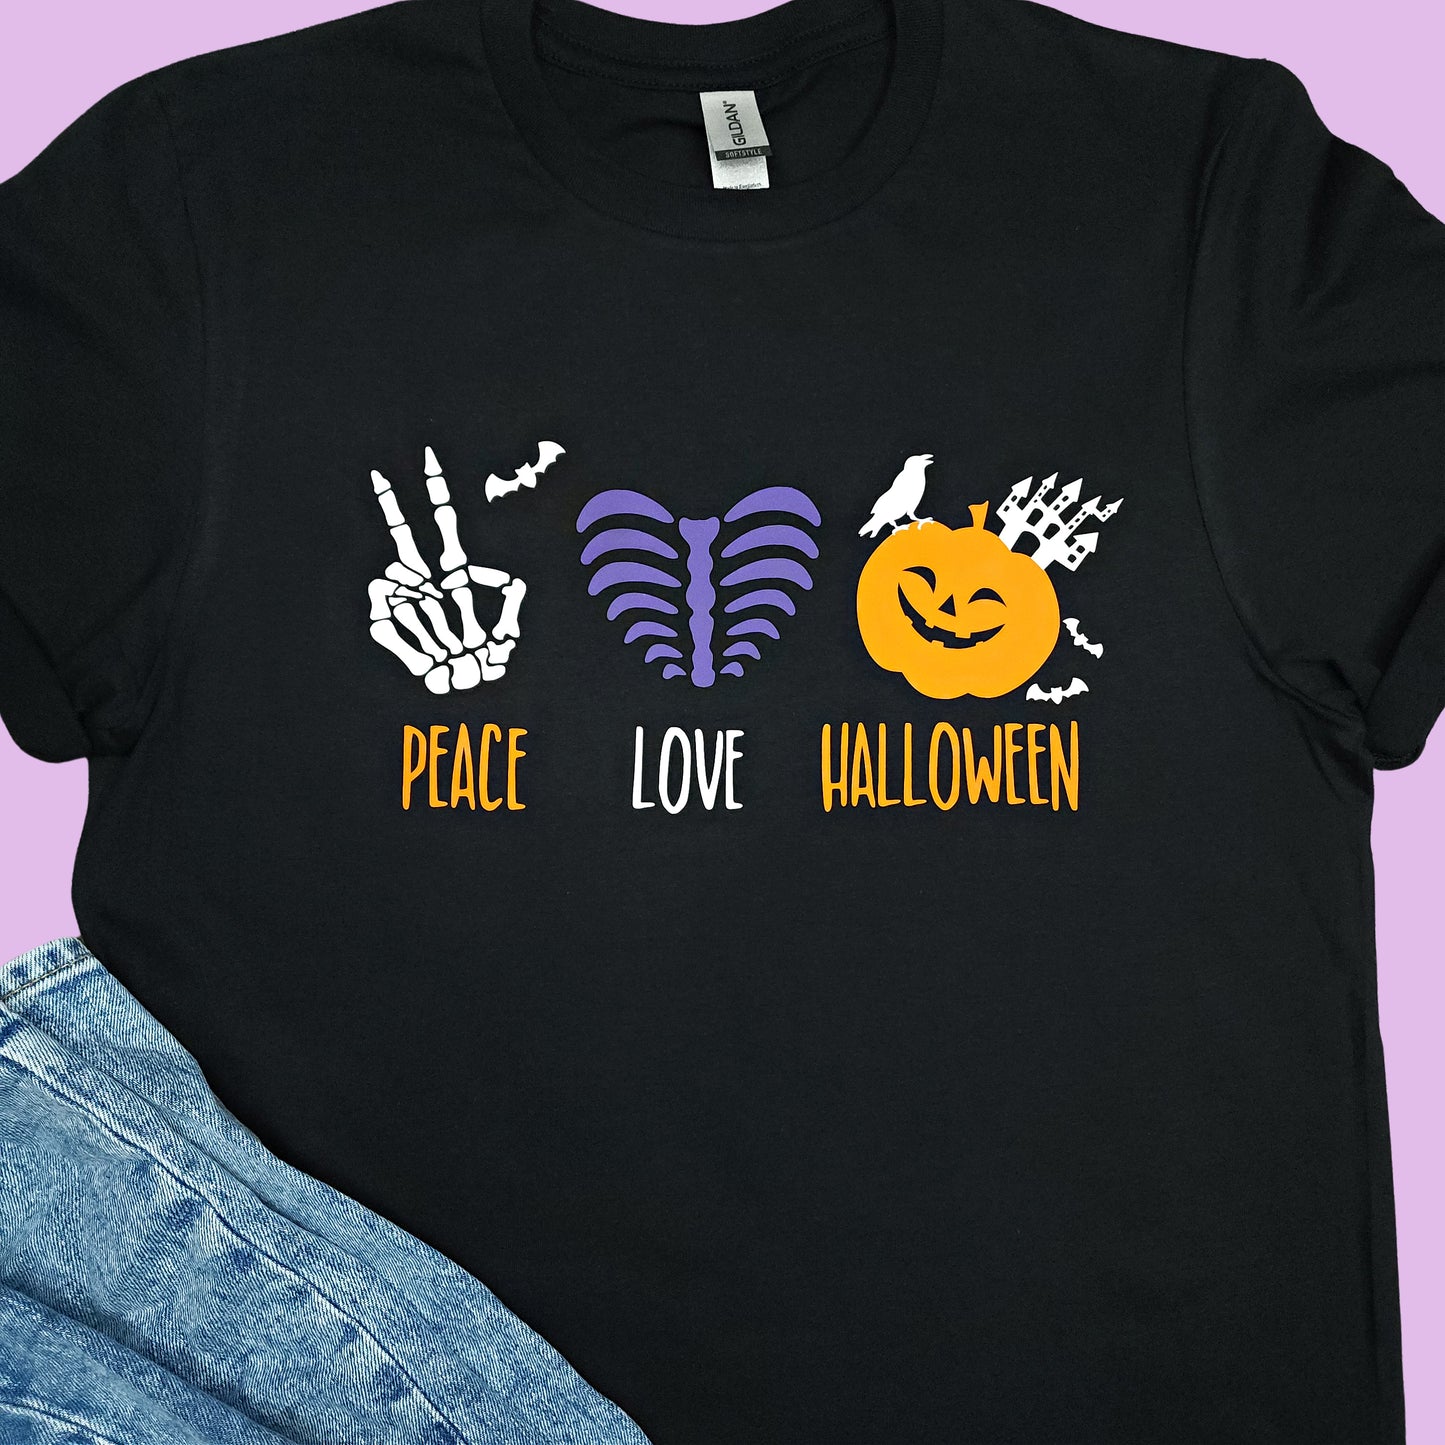 Peace, Love, Halloween T-Shirt - Unisex